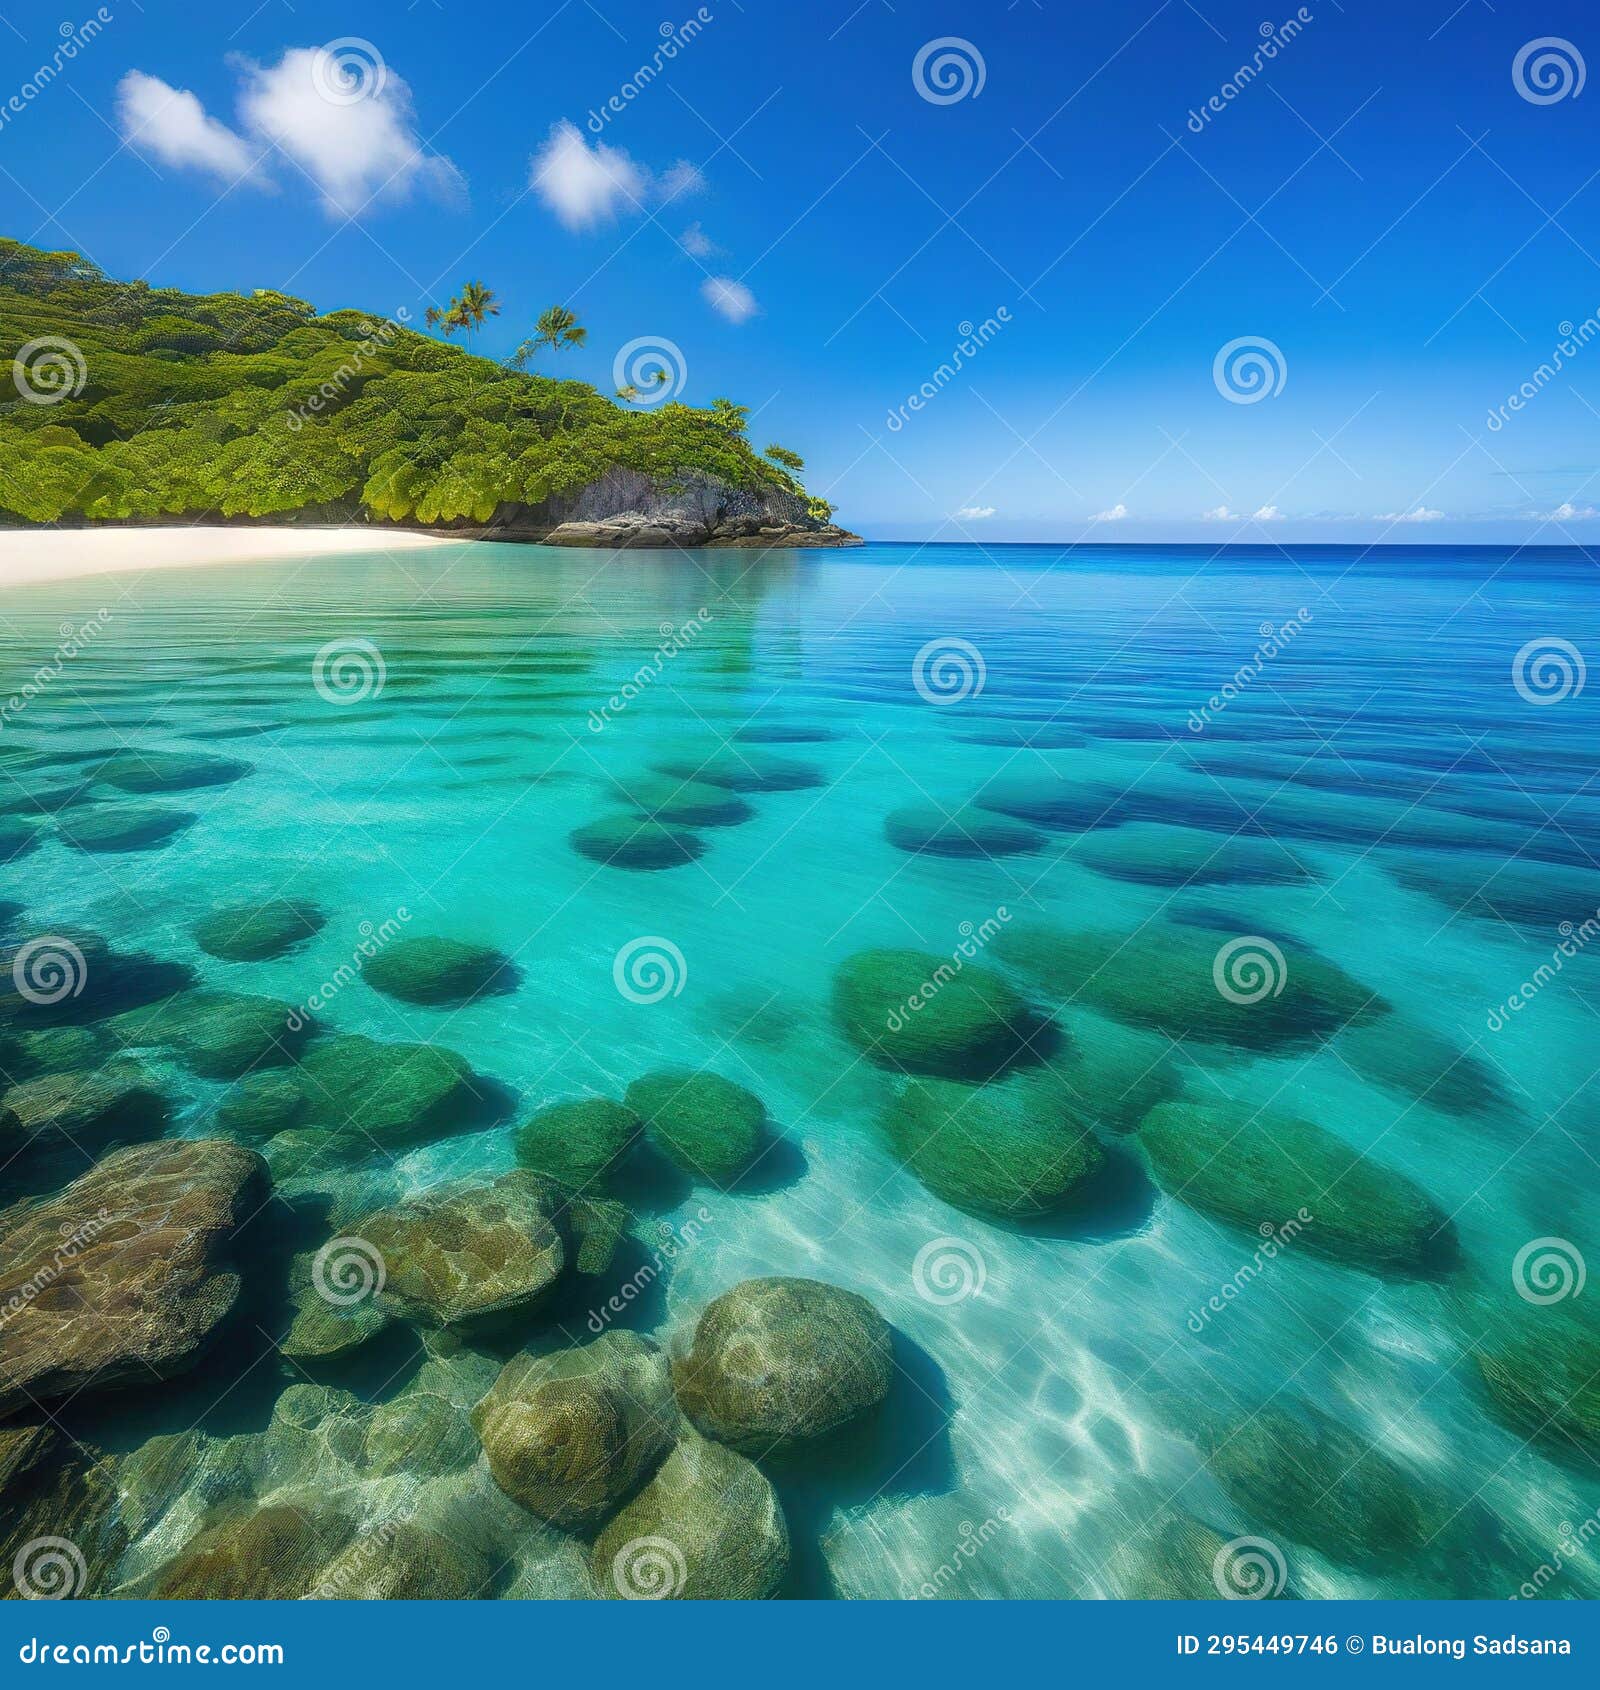 transparÃÂªncia da ÃÂ¡gua do mar em uma paisagem paradisÃÂ­aca criado por ia